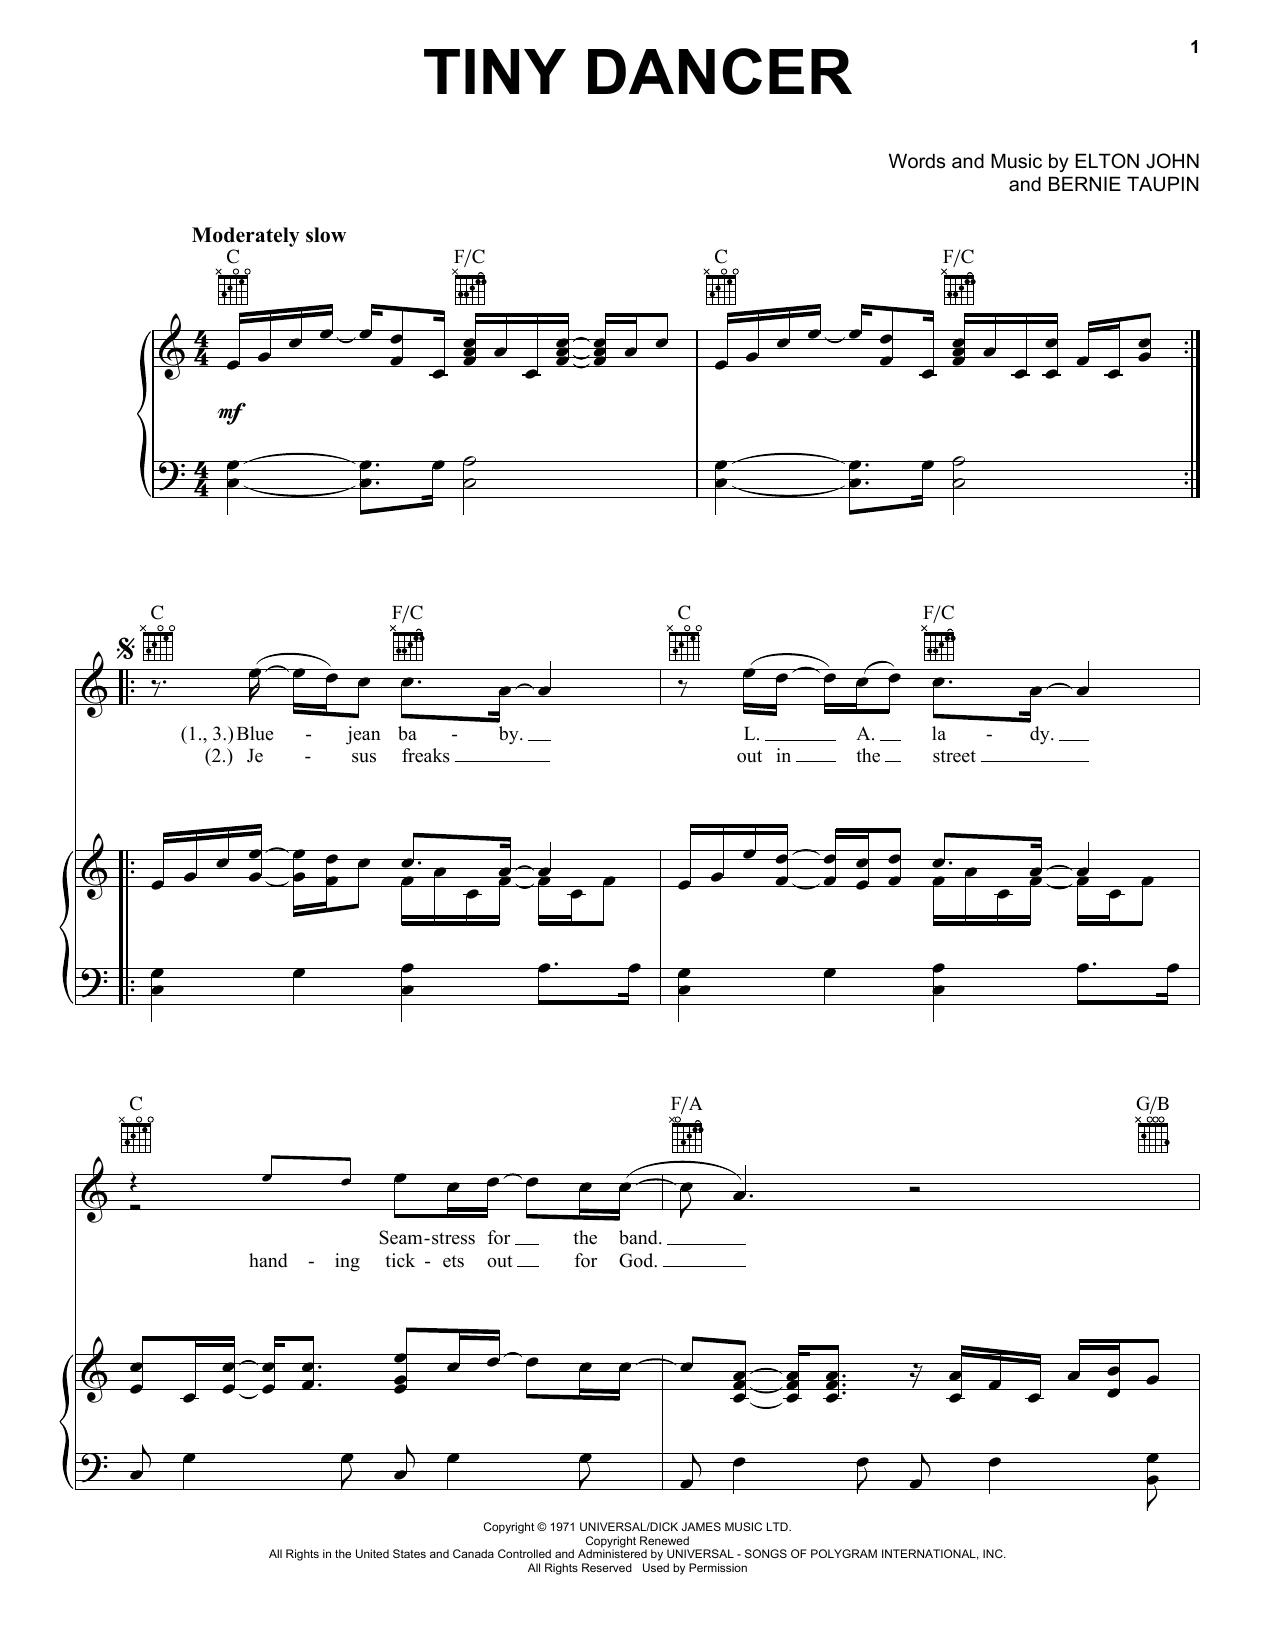 Elton John Tiny Dancer Sheet Music Notes & Chords for Piano (Big Notes) - Download or Print PDF